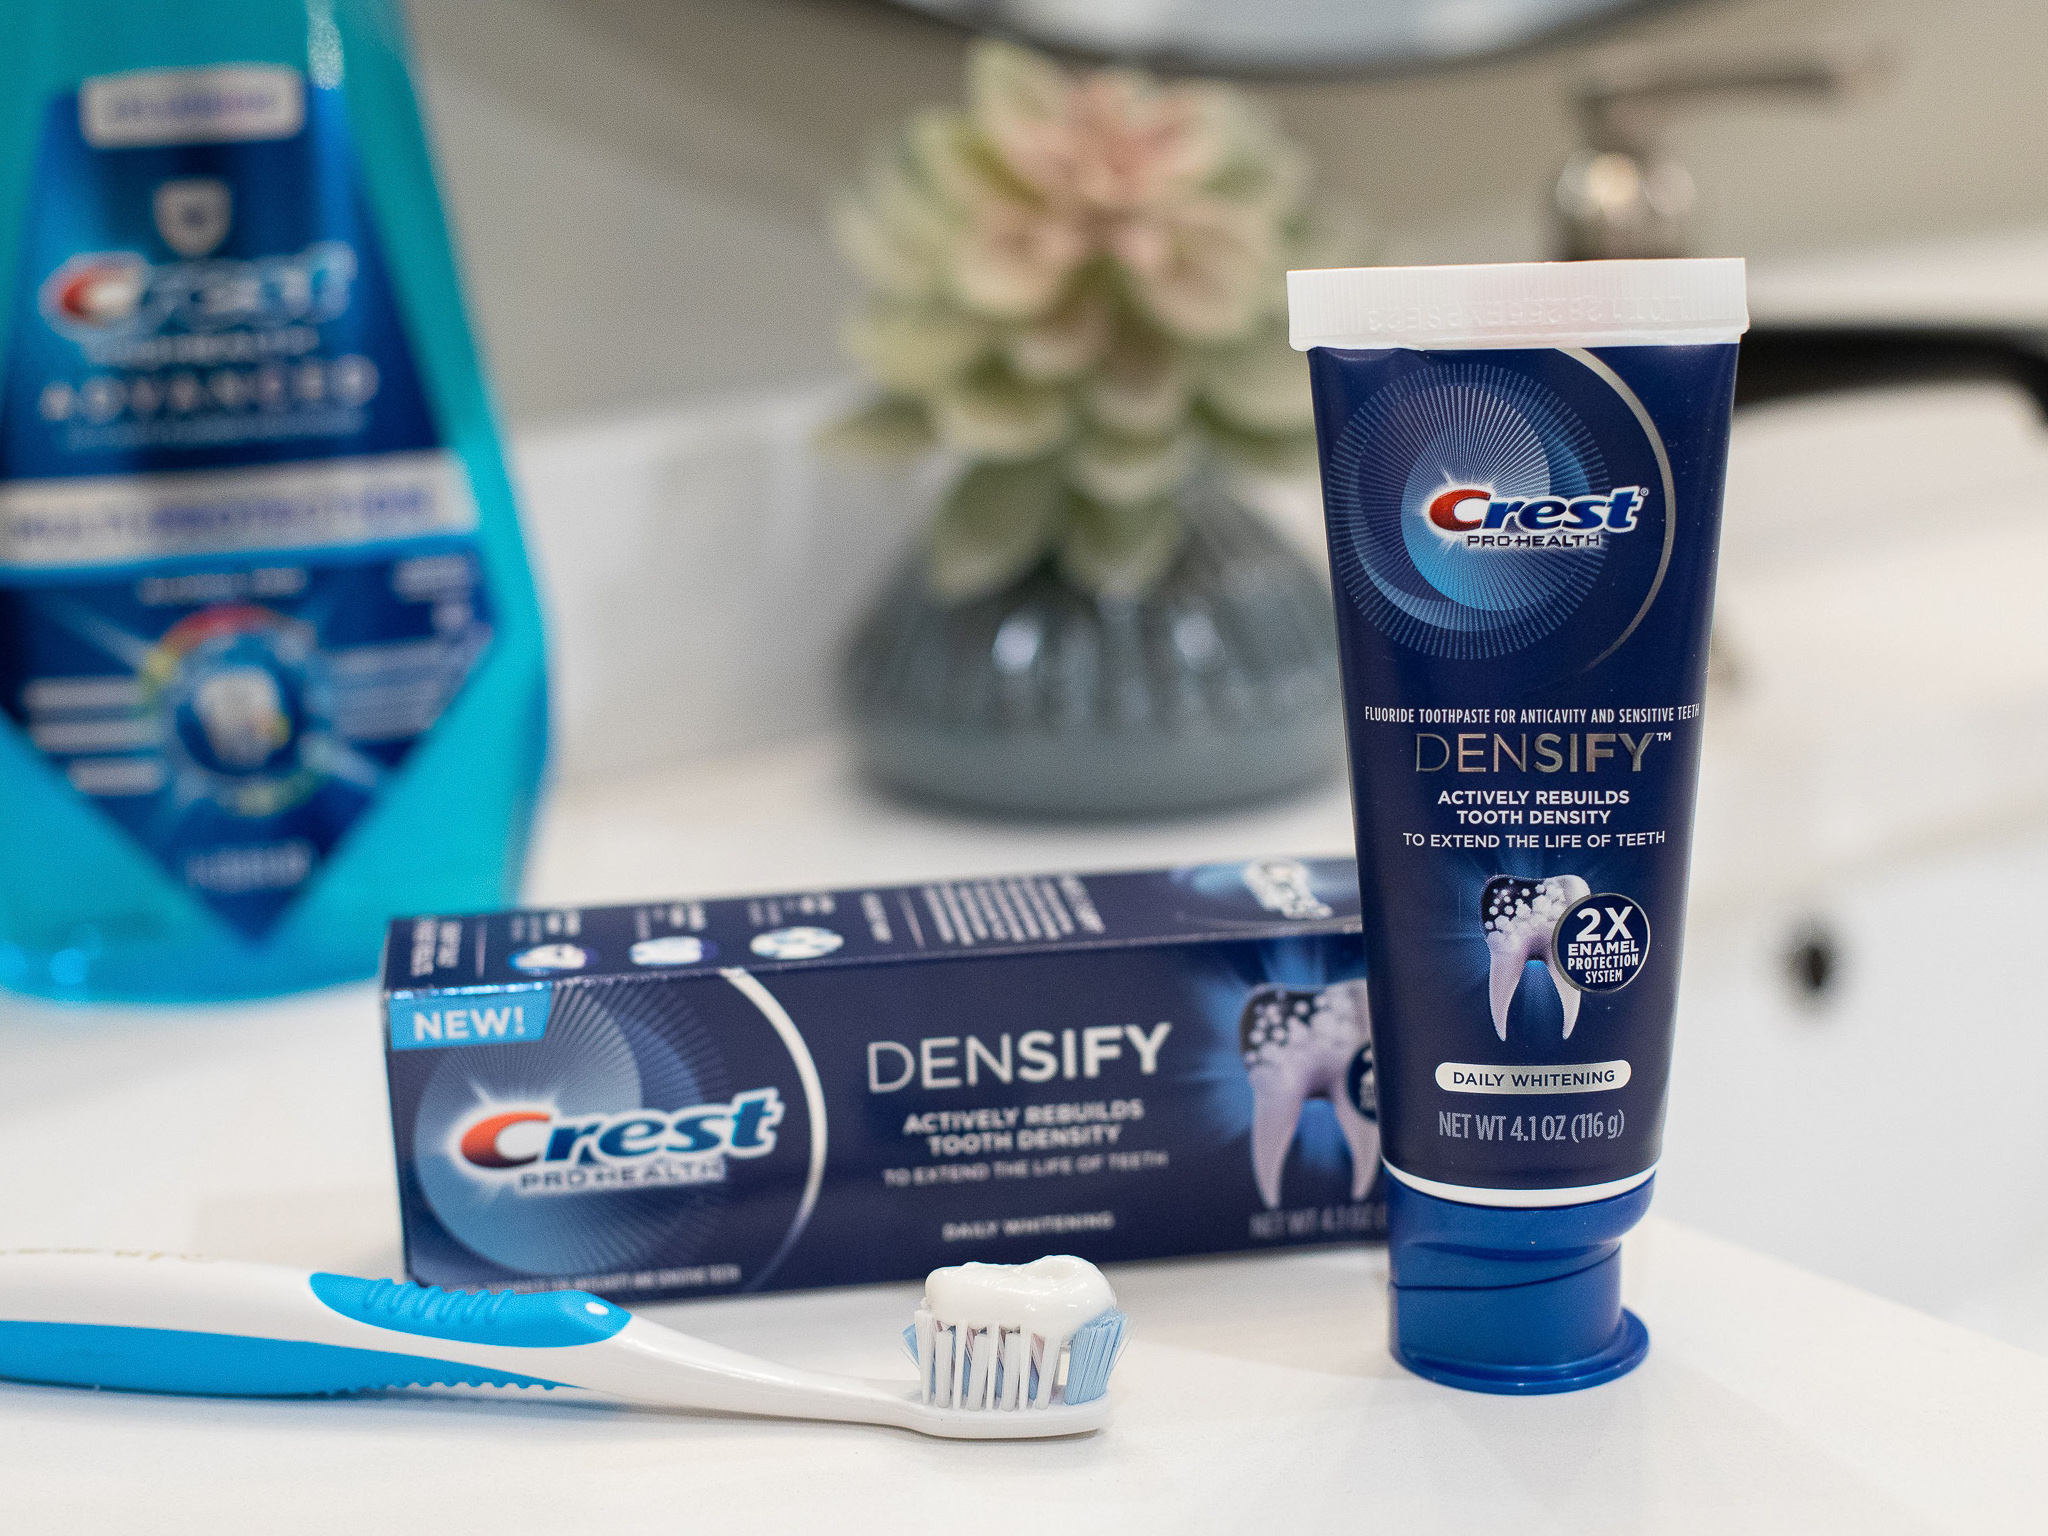 Grab Crest Densify Or Detoxify Toothpaste As Low As $1.49 At Kroger (Regular Price $7.99)